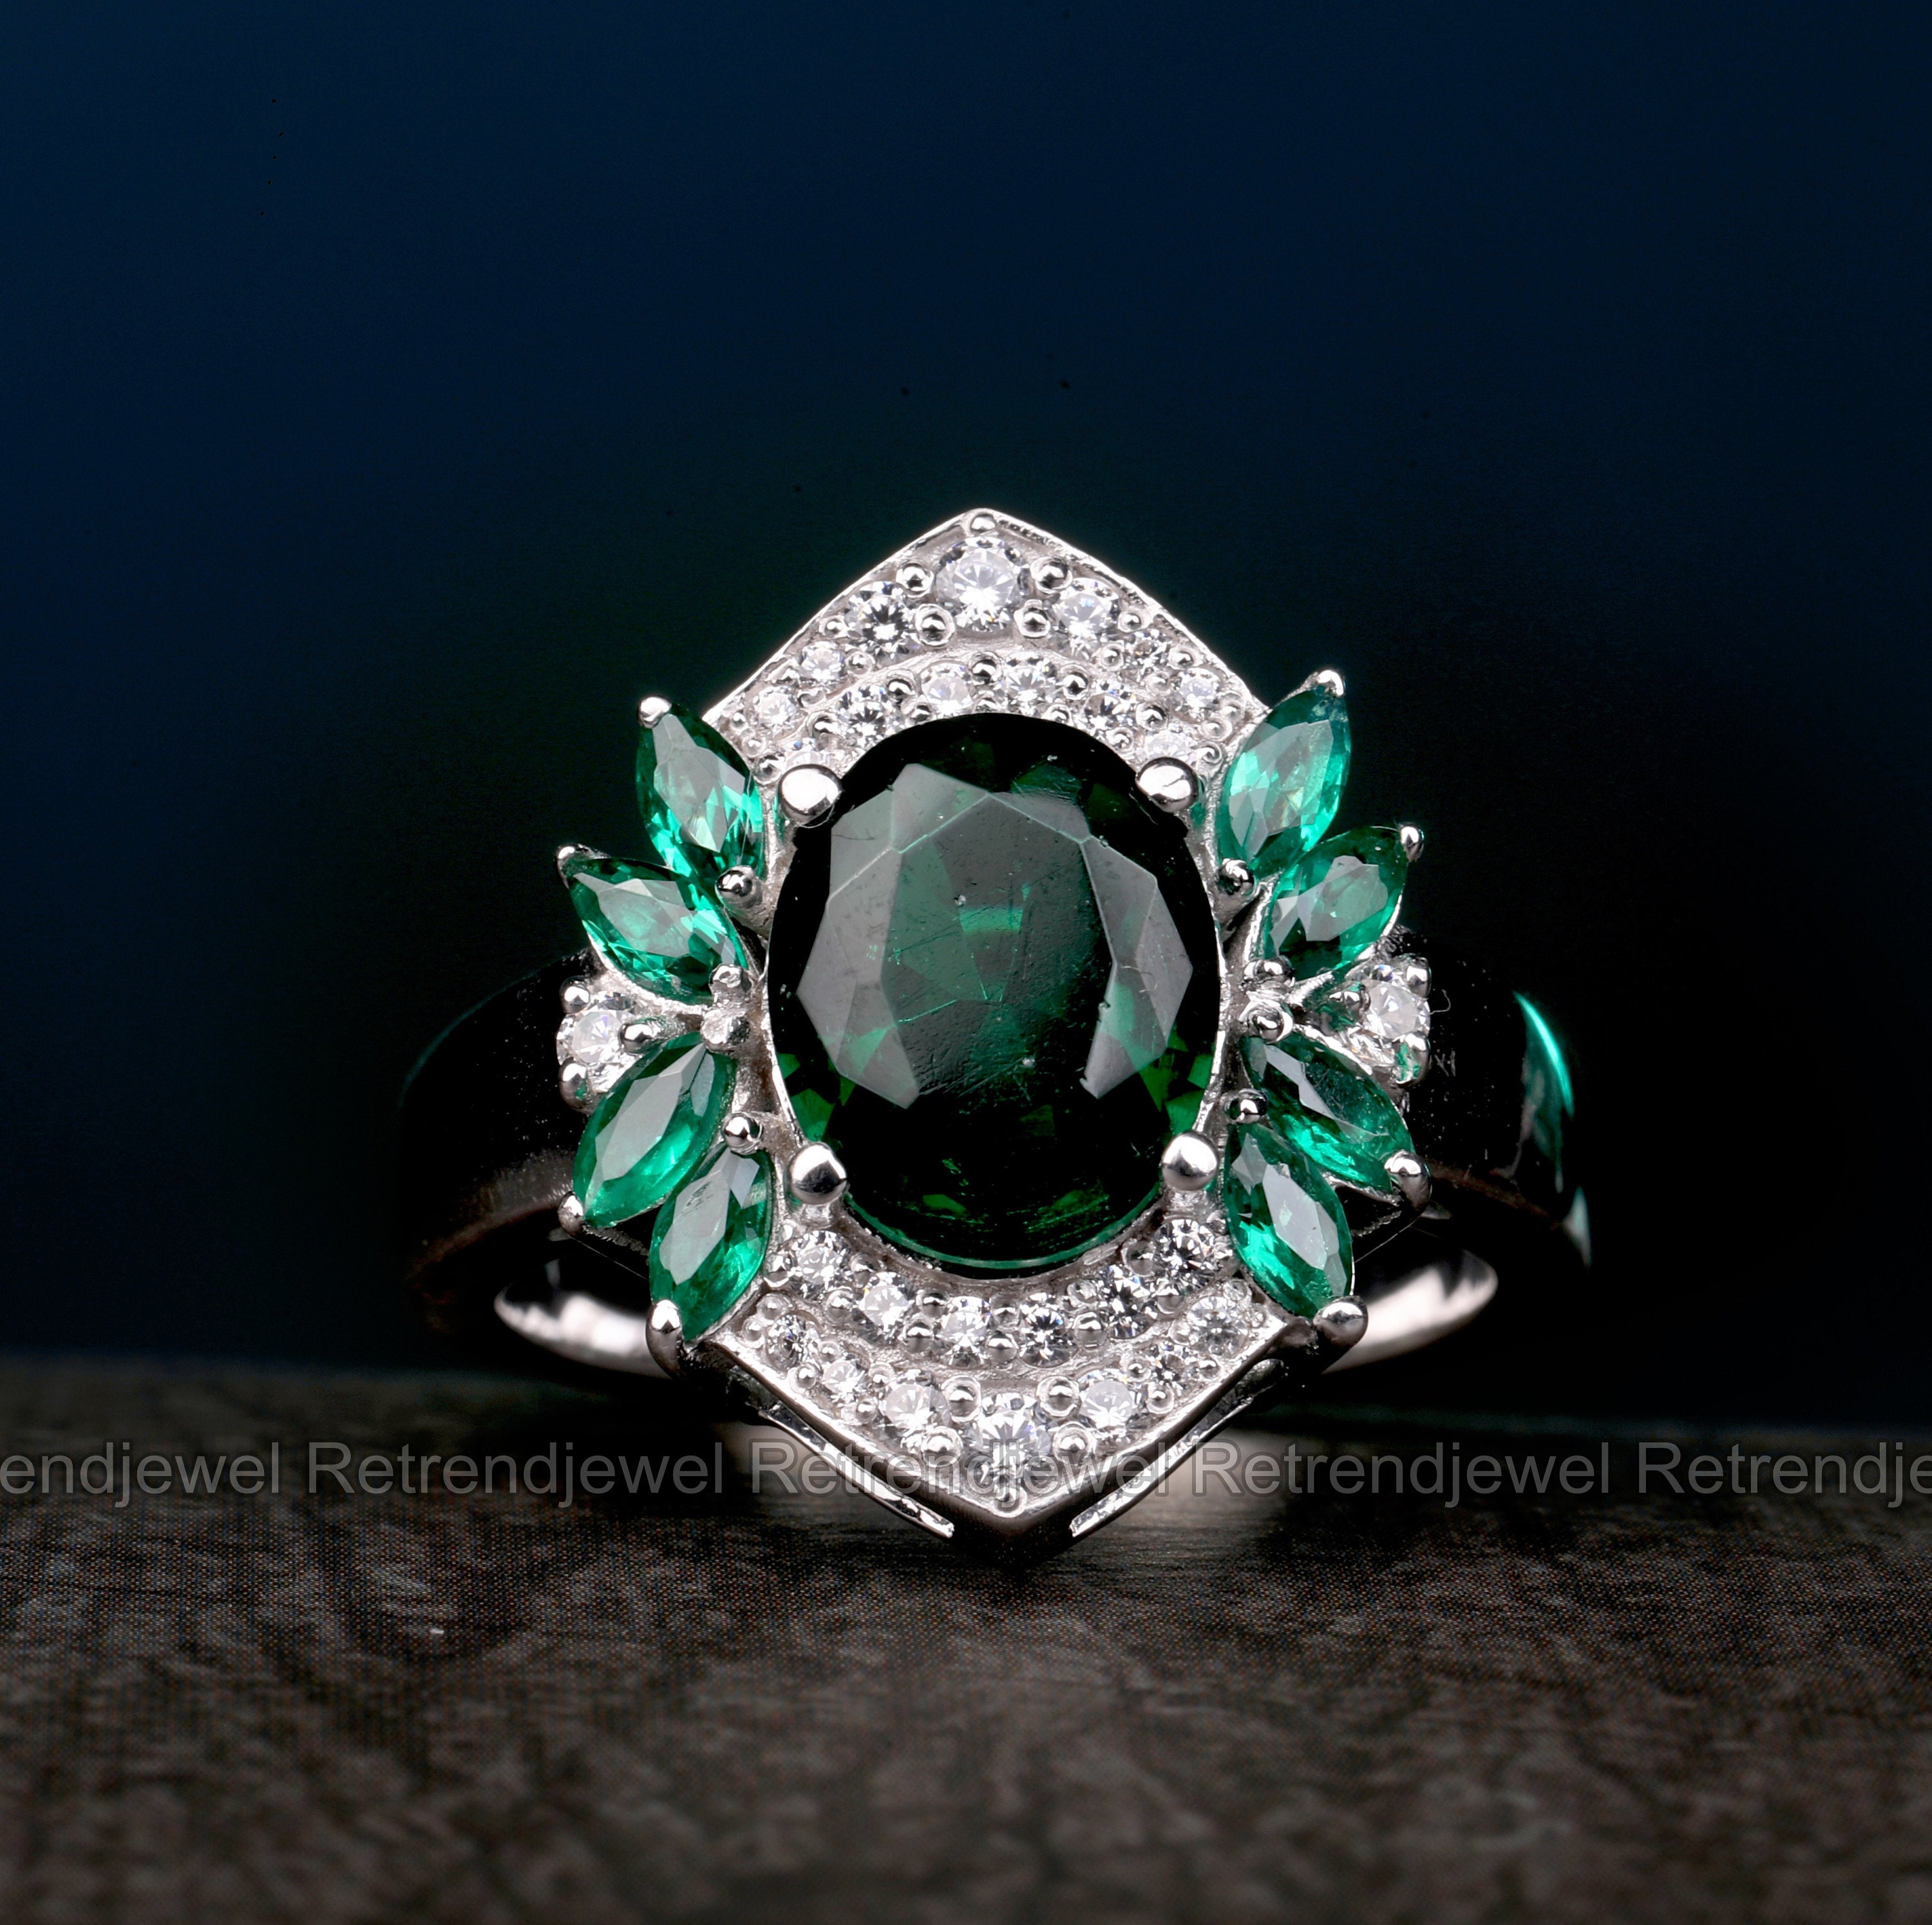 Schilling Platinum, Rectangular Emerald and Diamond Ring, Cocktail Ring | Gemstone Ring, Size 5 3/4, Vintage Jewelry